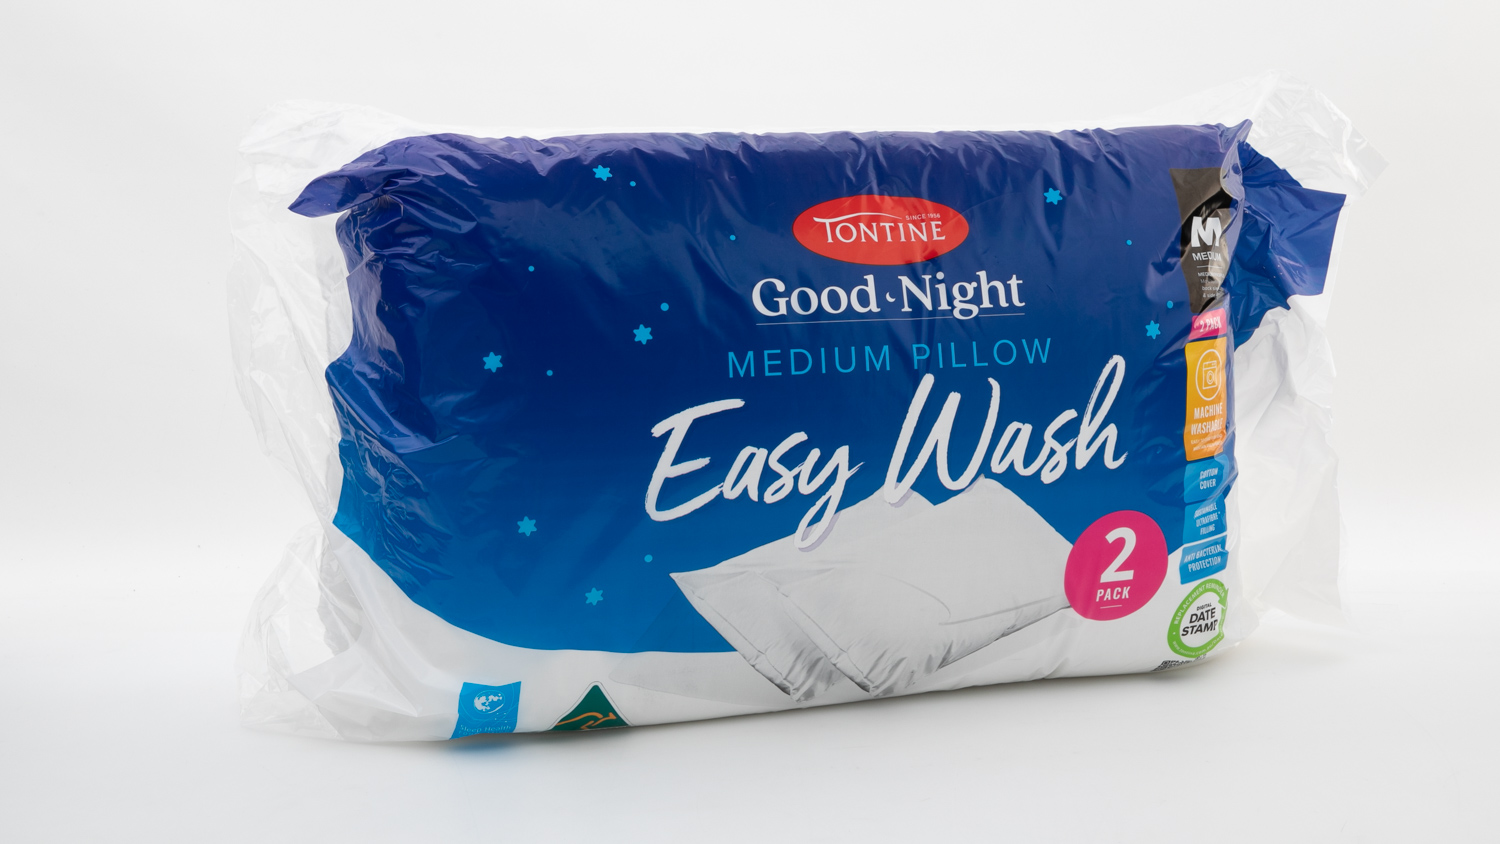 Tontine Goodnight Easy Wash Medium Pillow 2PK carousel image